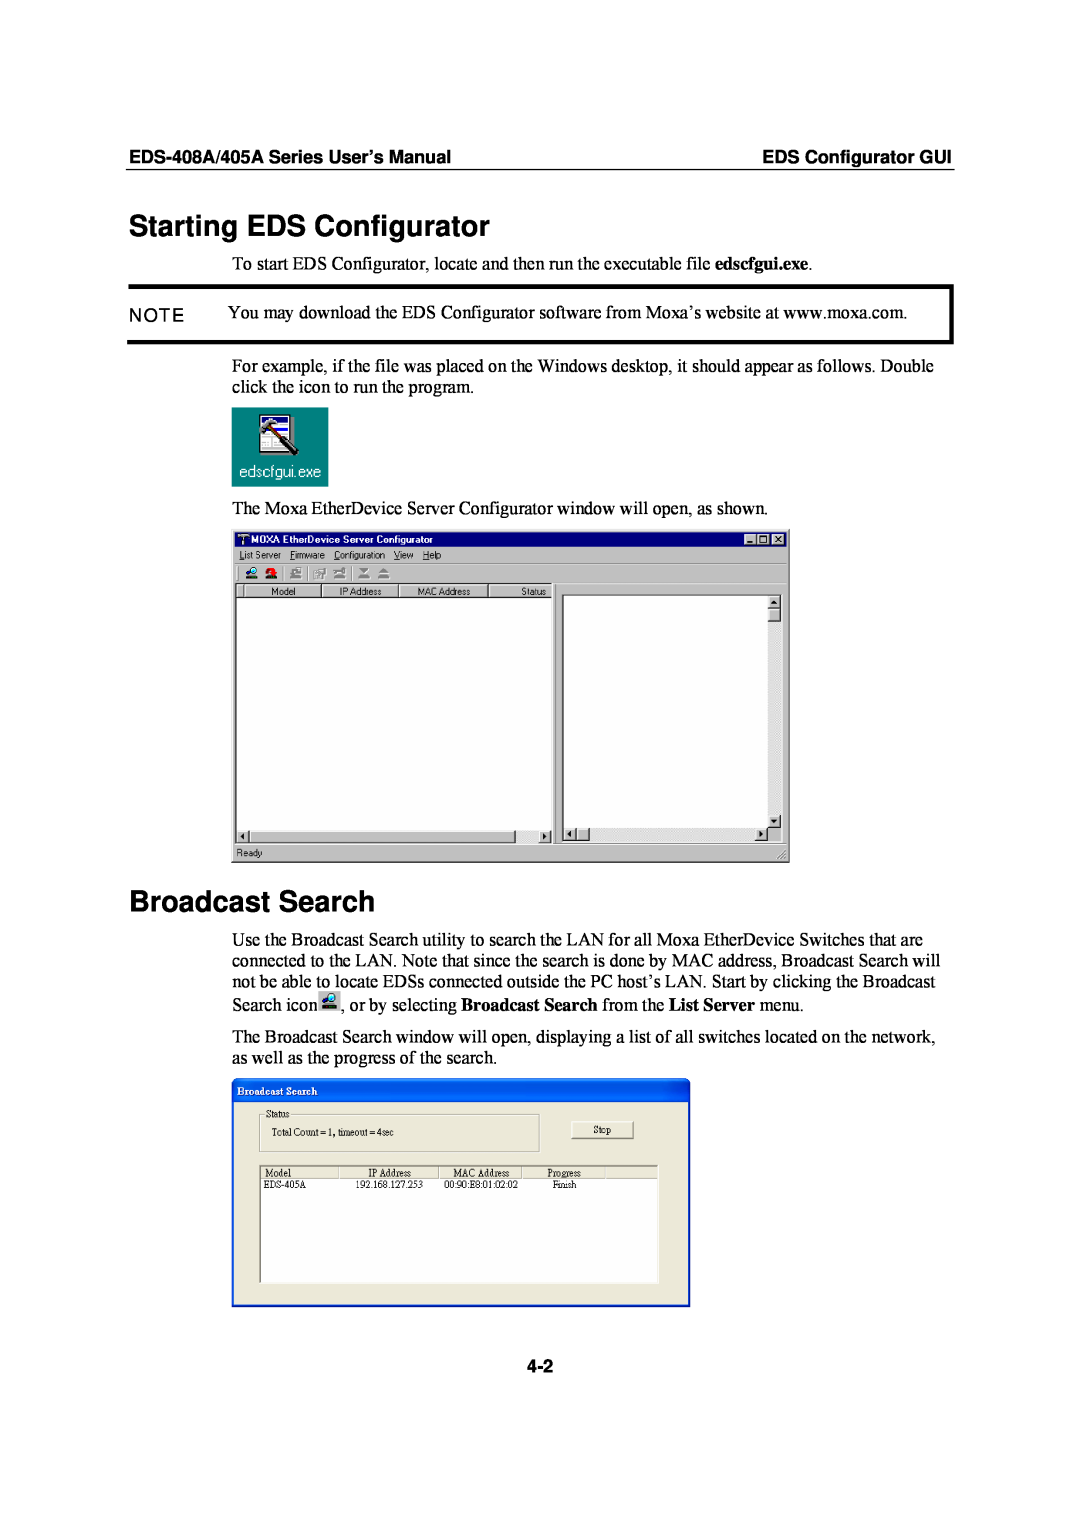 Moxa Technologies EDS-405A, EDS-408A user manual Starting EDS Configurator, Broadcast Search, EDS Configurator GUI 